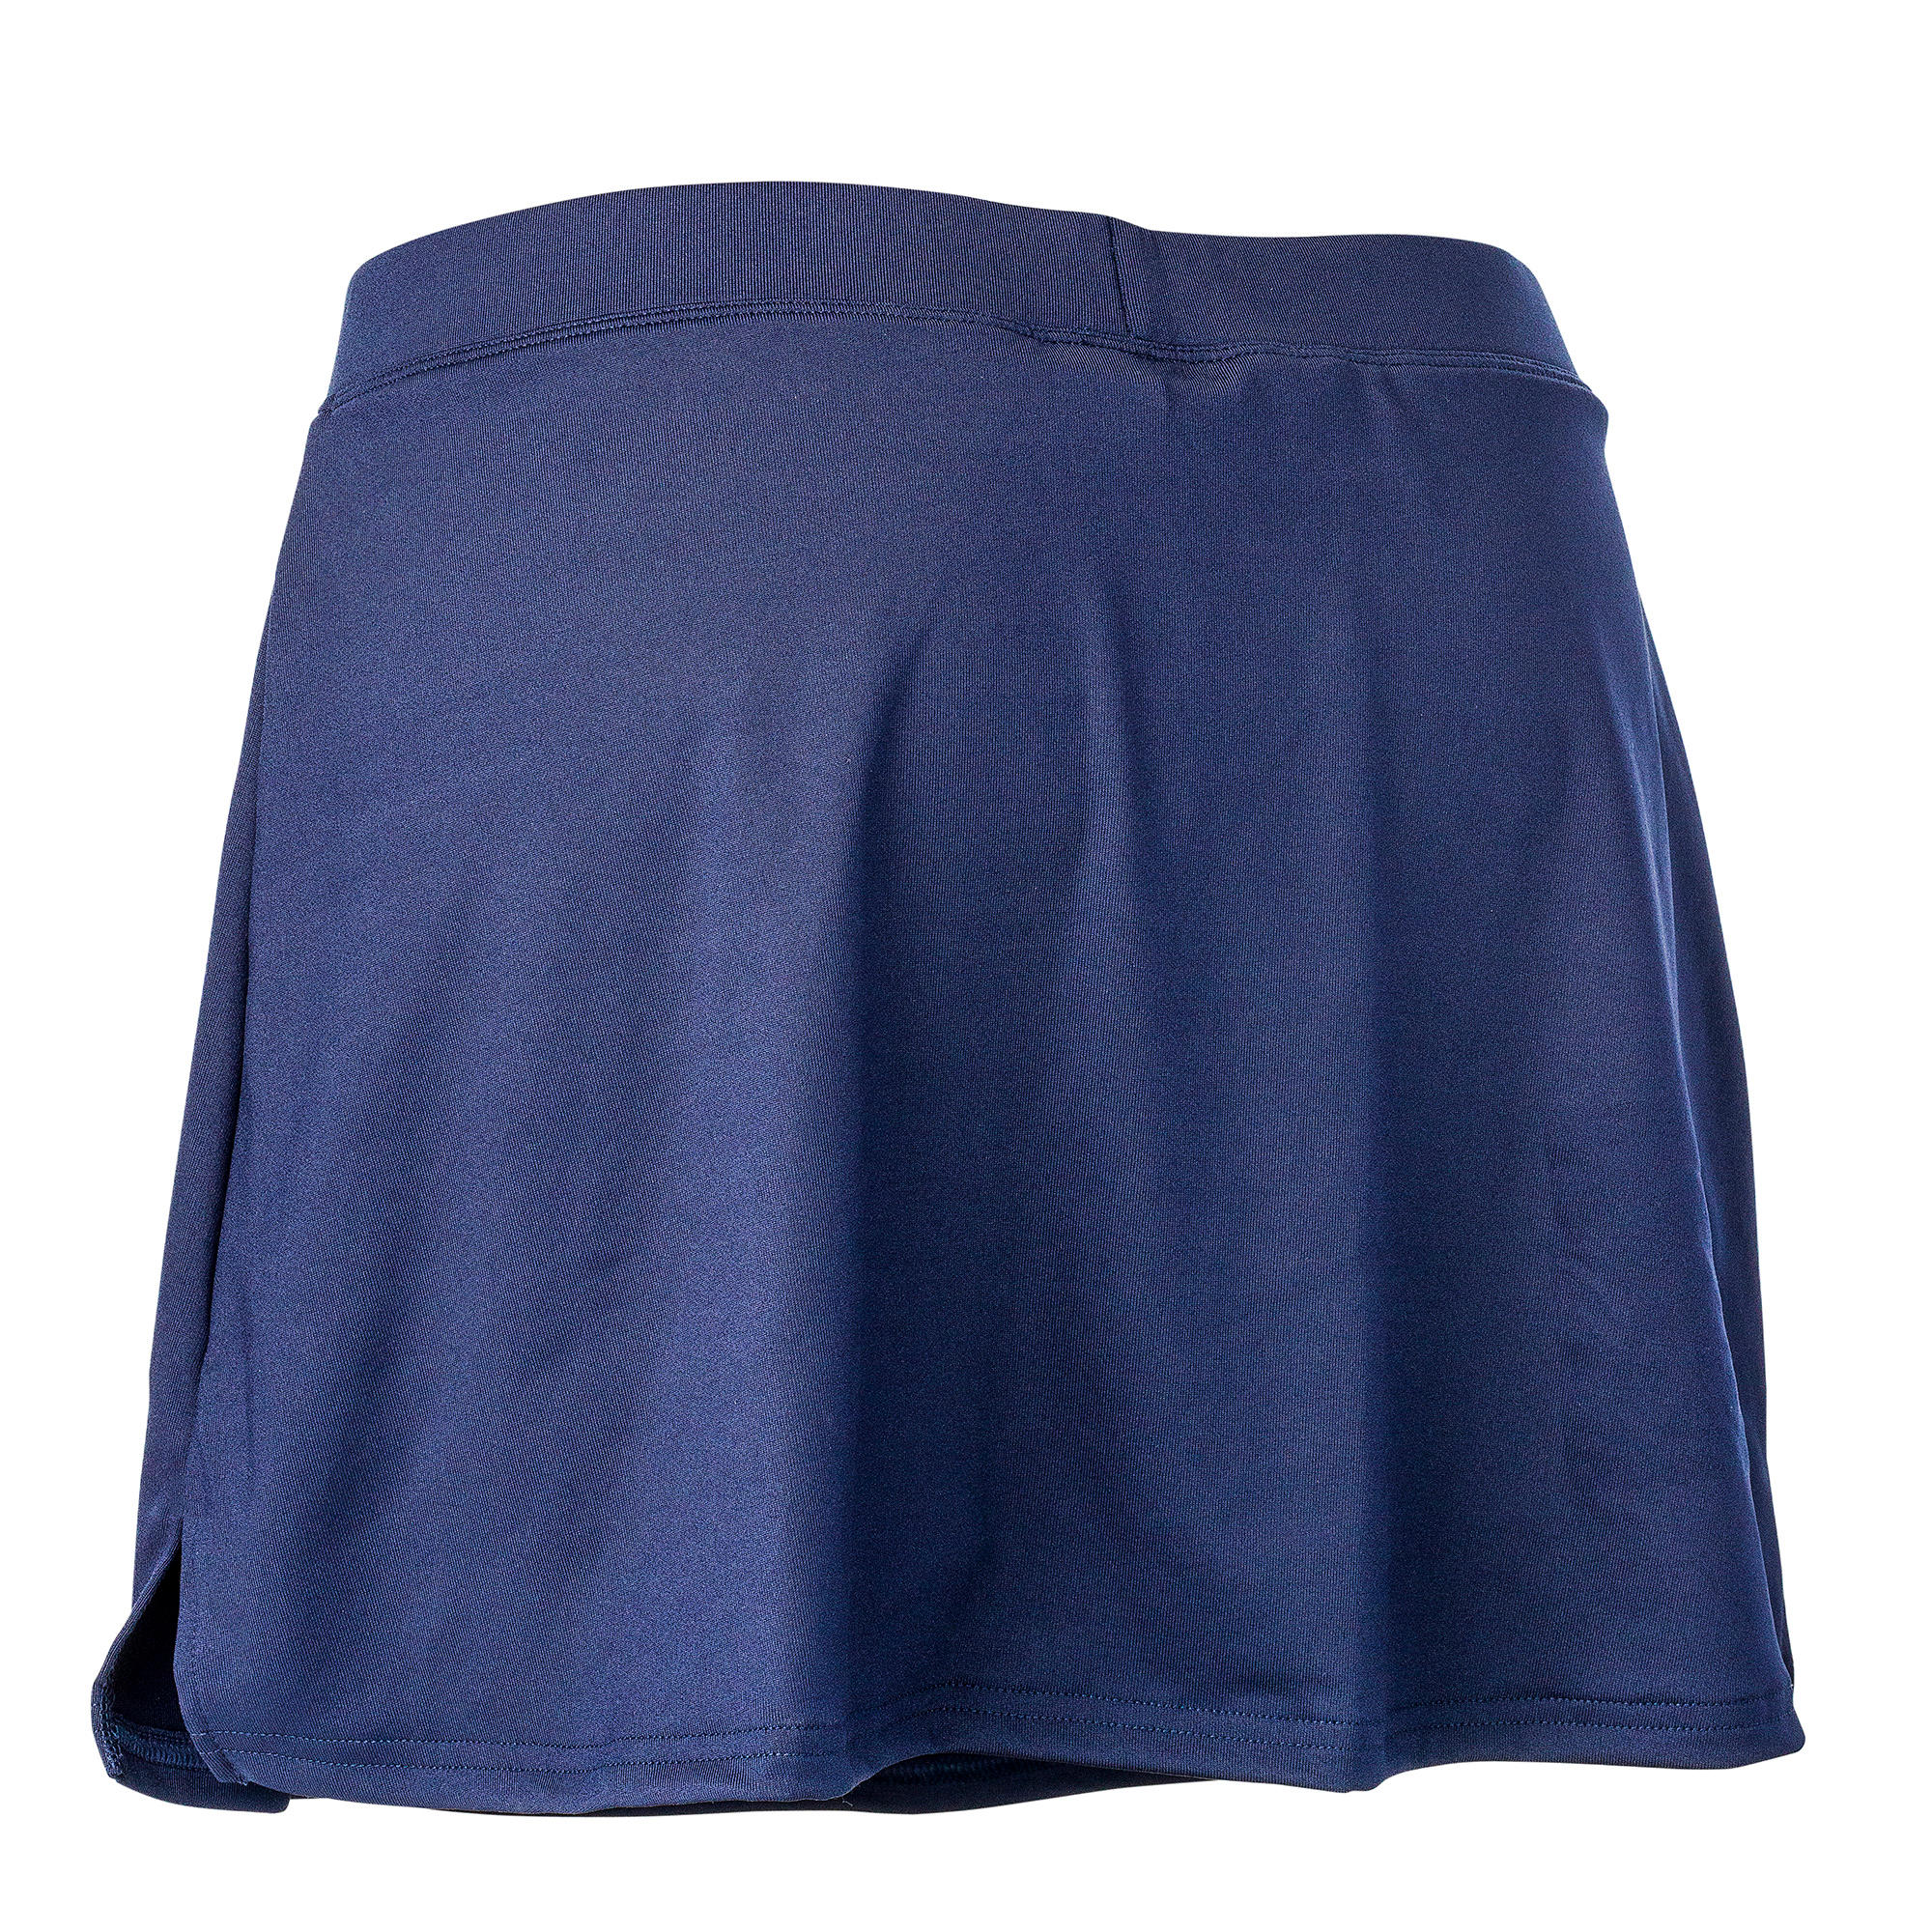 Women's Field Hockey Skirt FH500 - Navy Blue 2/4